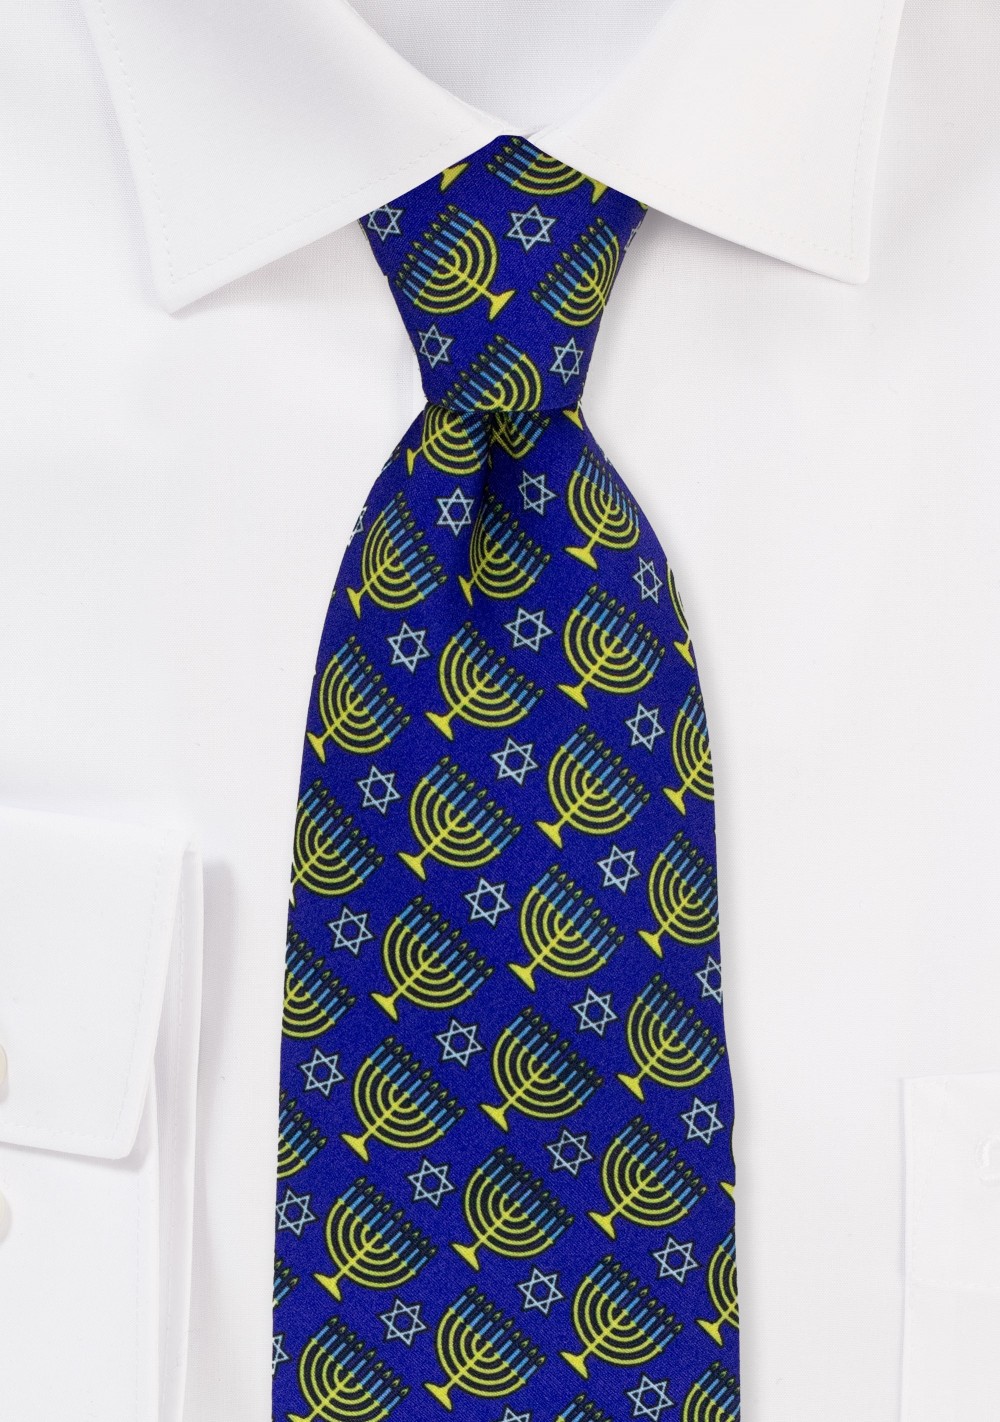 Blue and Gold Menorah Print Necktie